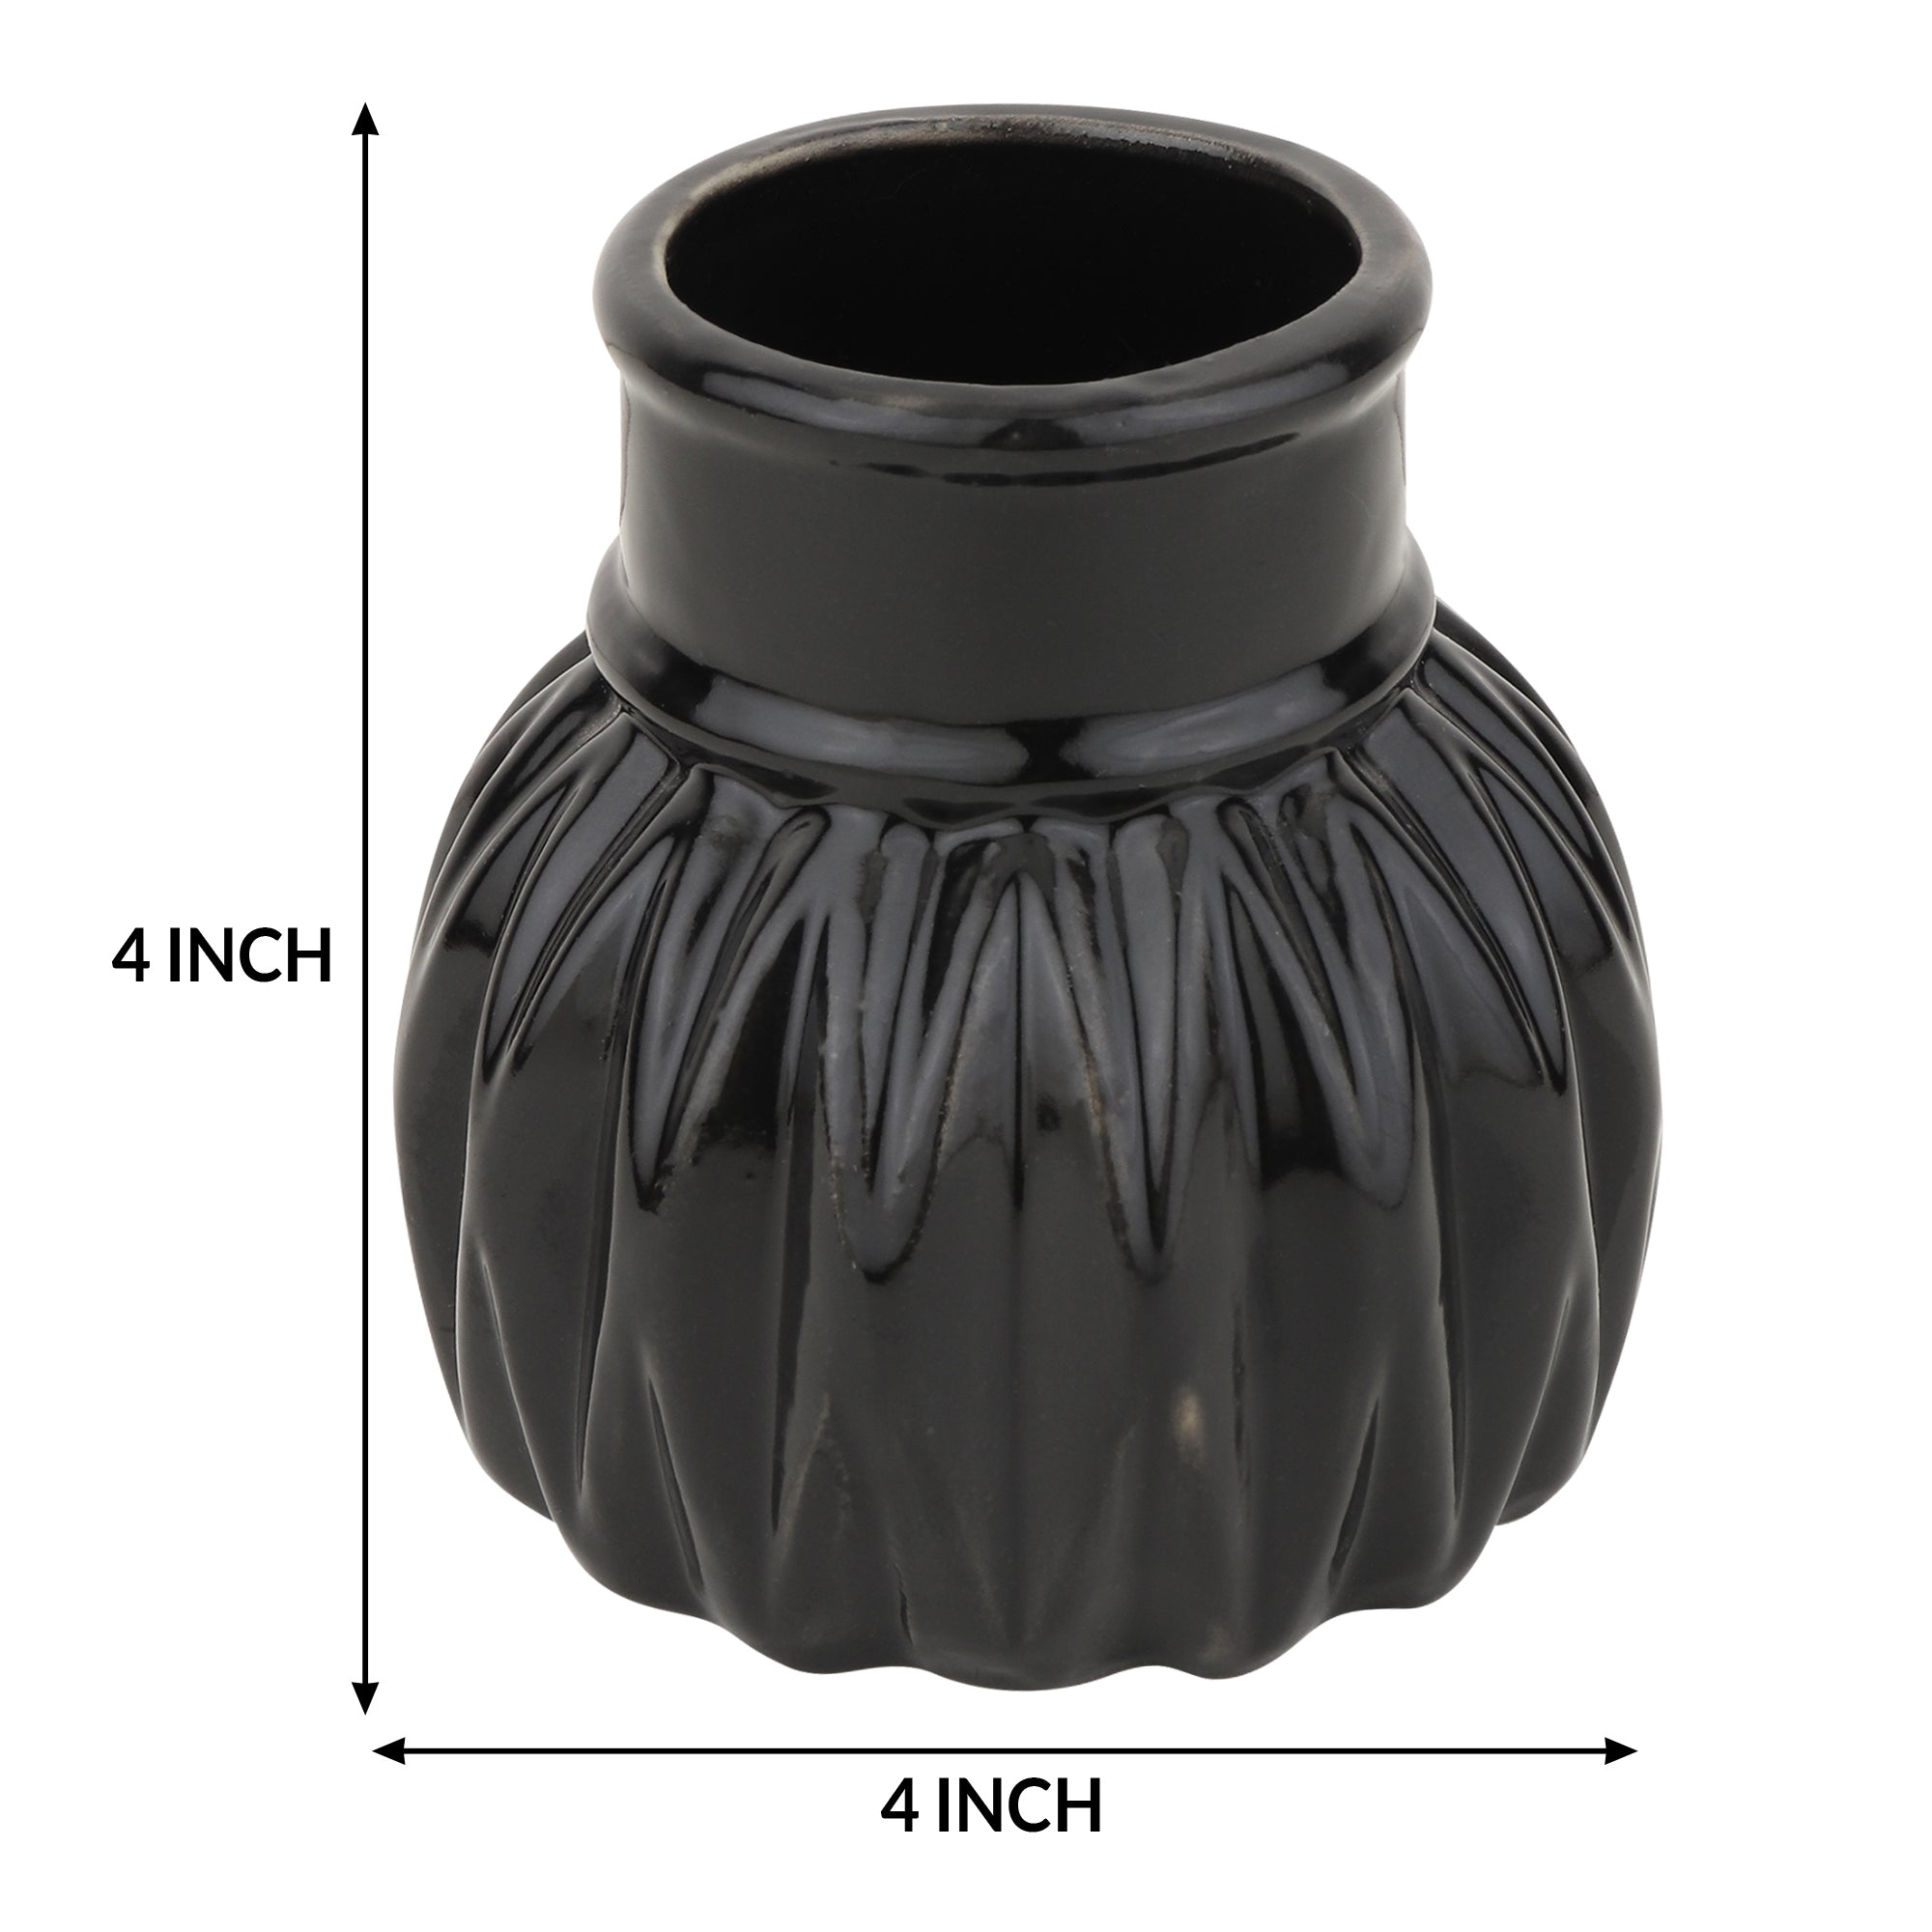 Black WaveCera Vase small